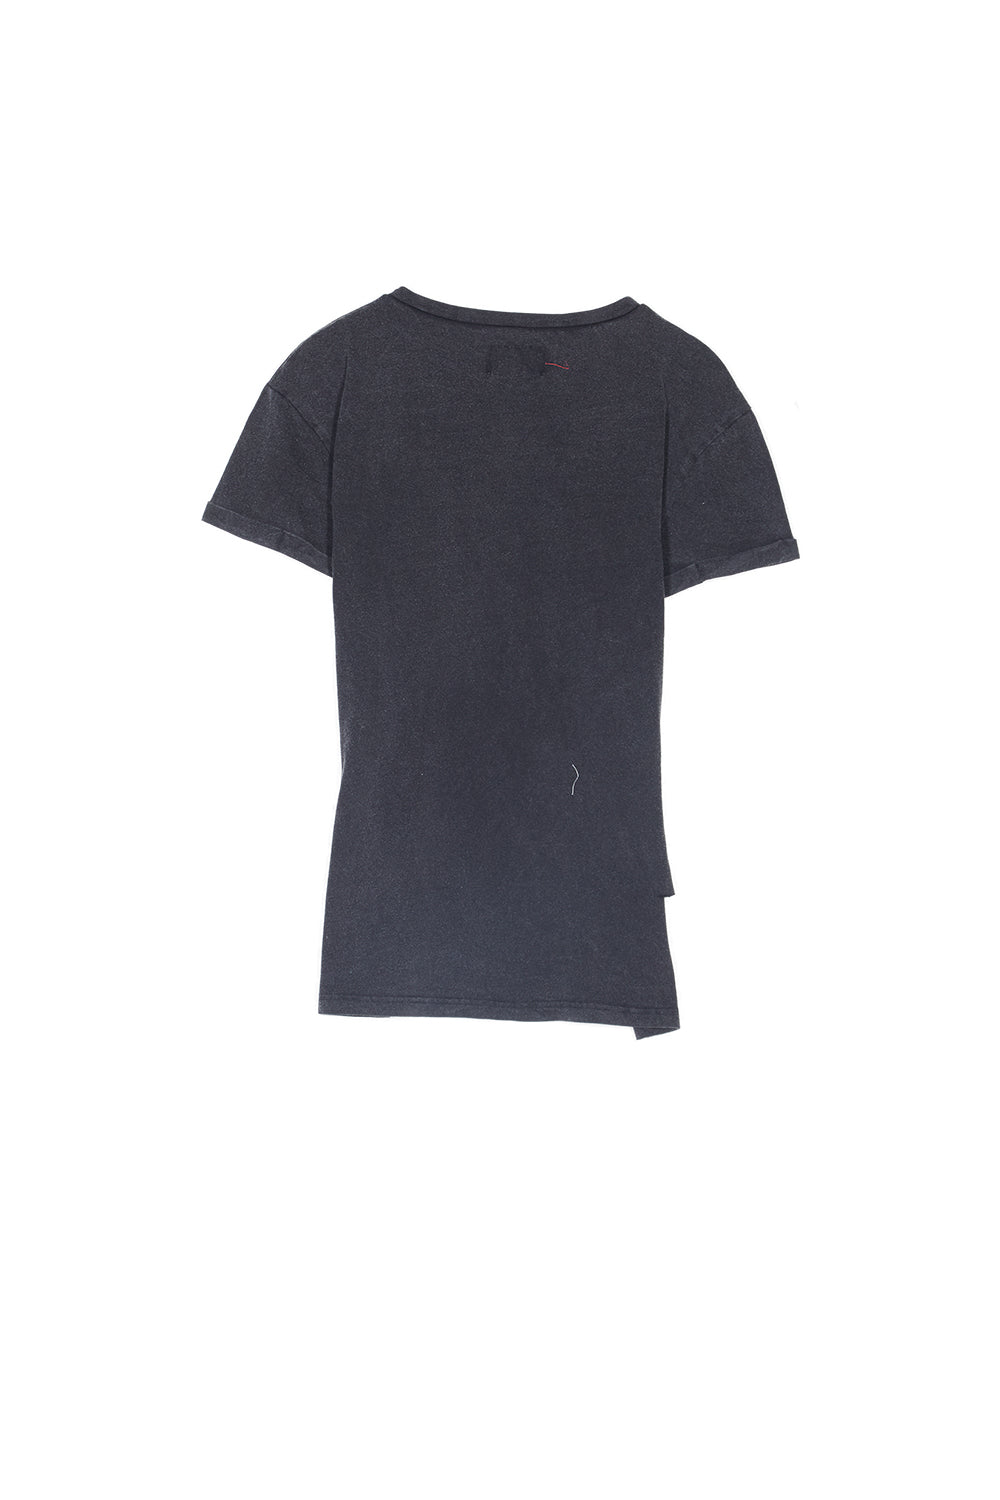 Sixth June - T-shirt anneaux noir